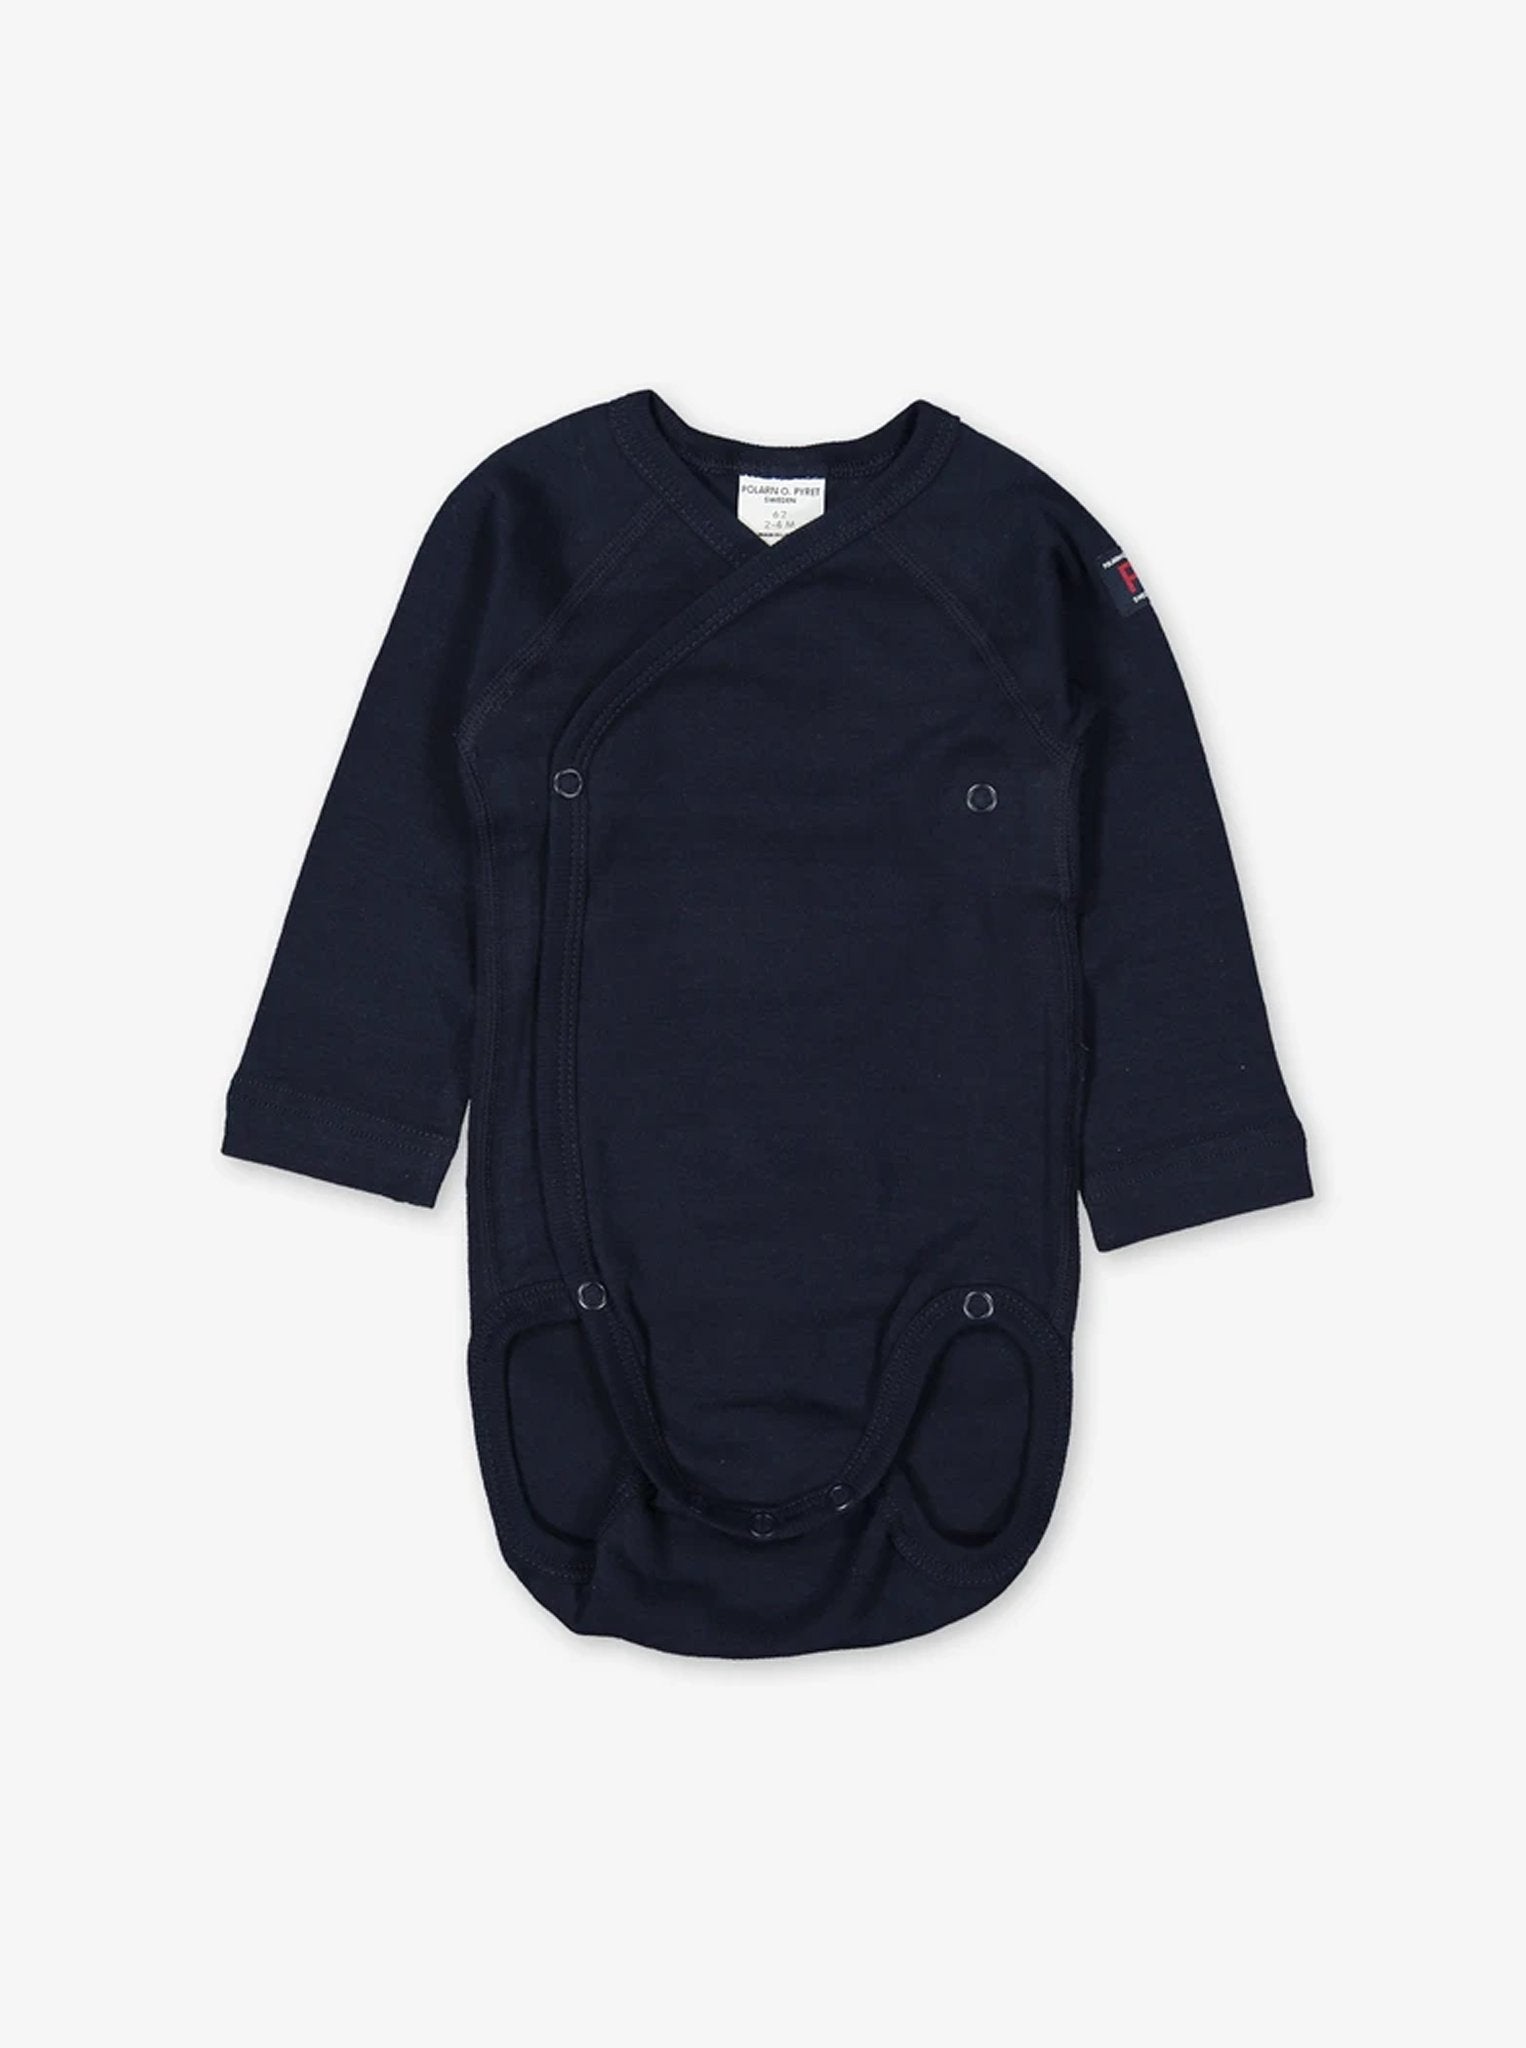 newborn babygrow navy blue, ethical quality organic cotton, polarn o. pyret classic